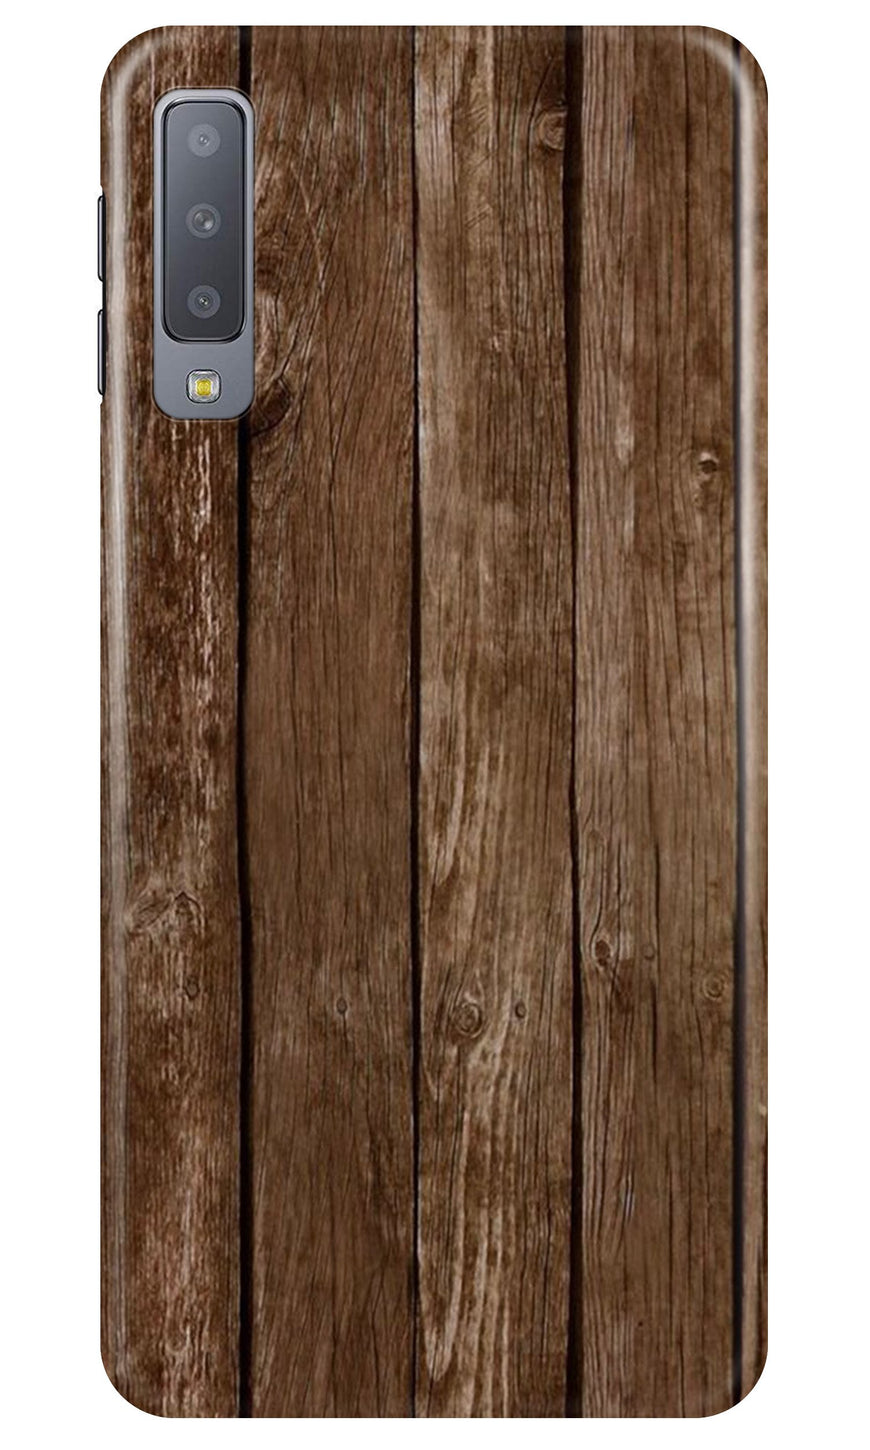 Wooden Look Case for Samung Galaxy A70s  (Design - 112)